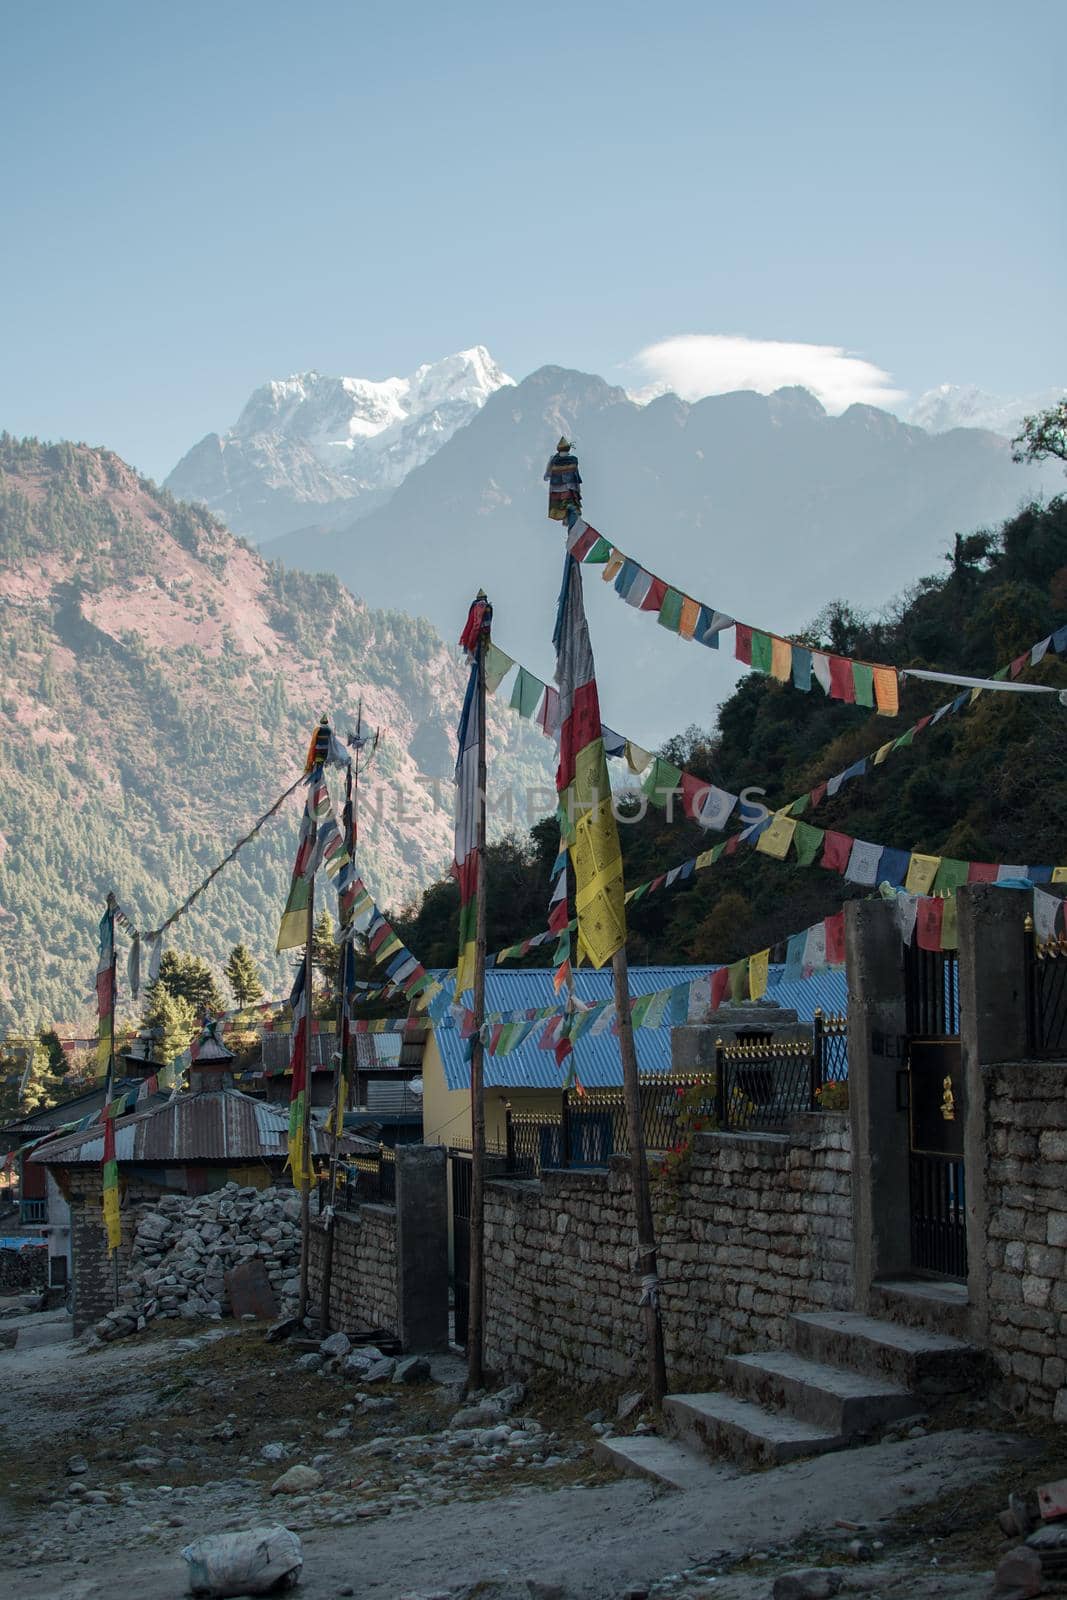 Buddhist prayer flags in the nepalese mountains along Annapurna circuit, Himalaya, Nepal, Asia